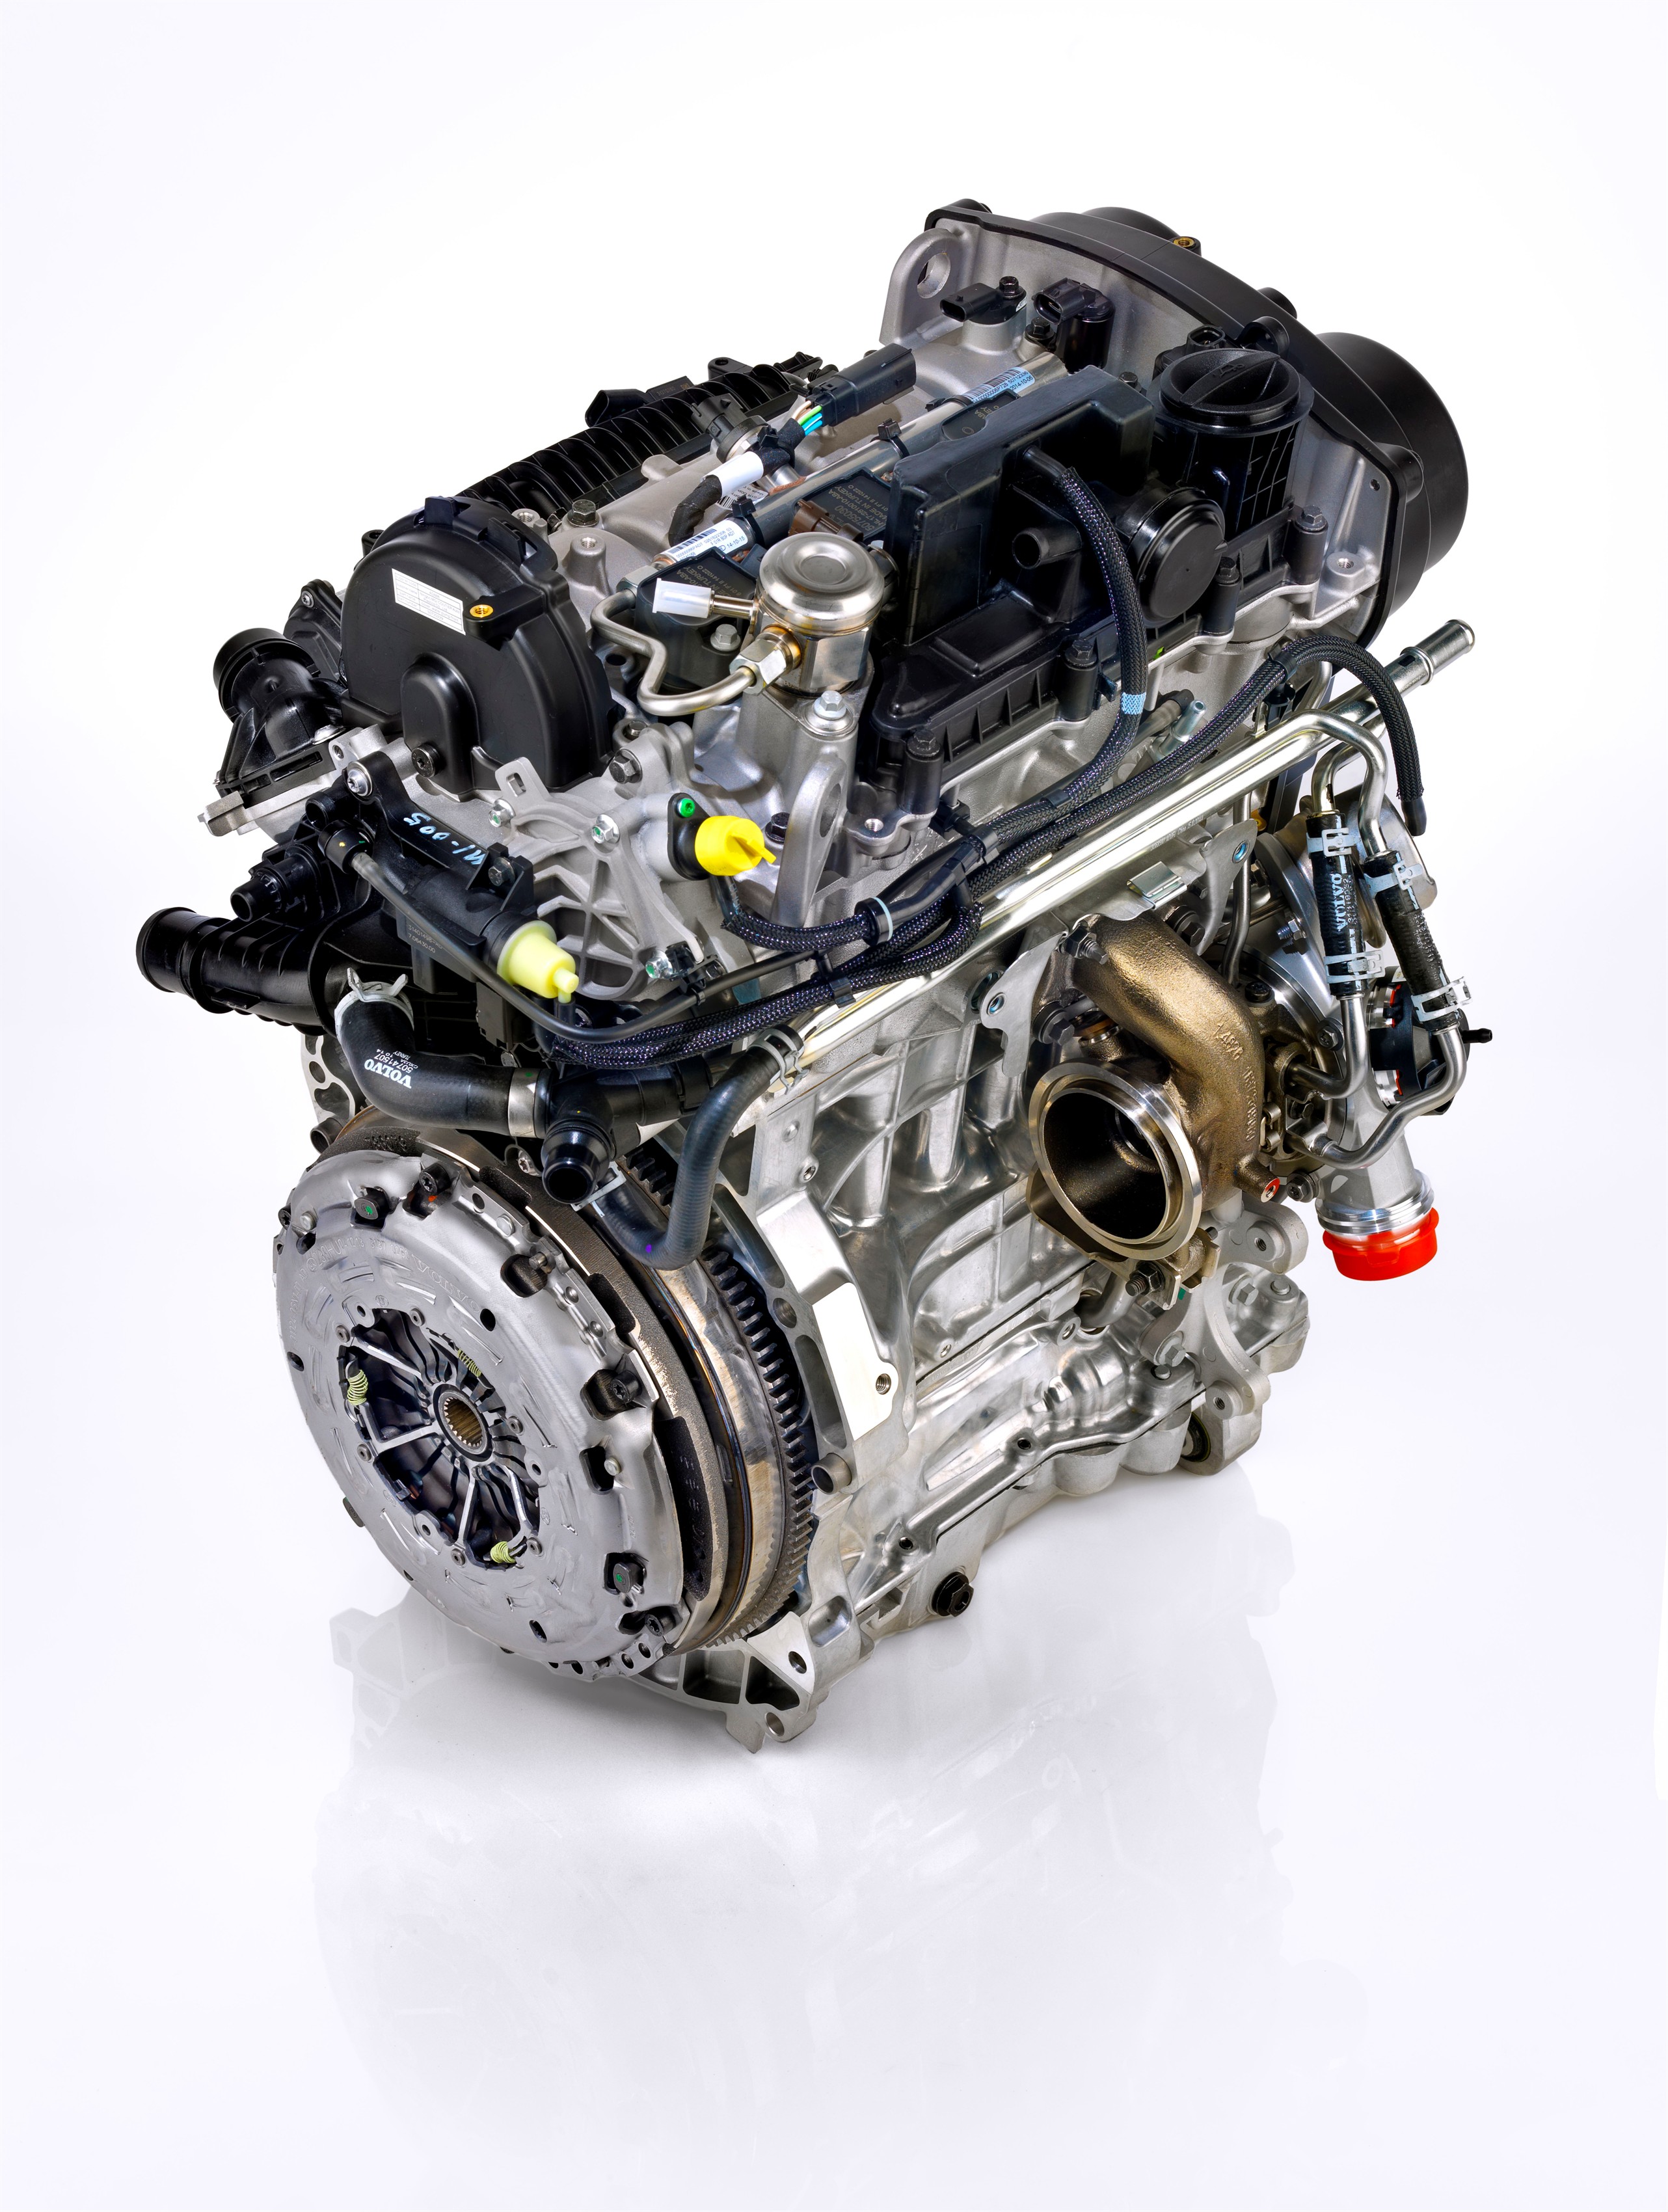 Volvo putting together 3 cylinder turbo petrol engine